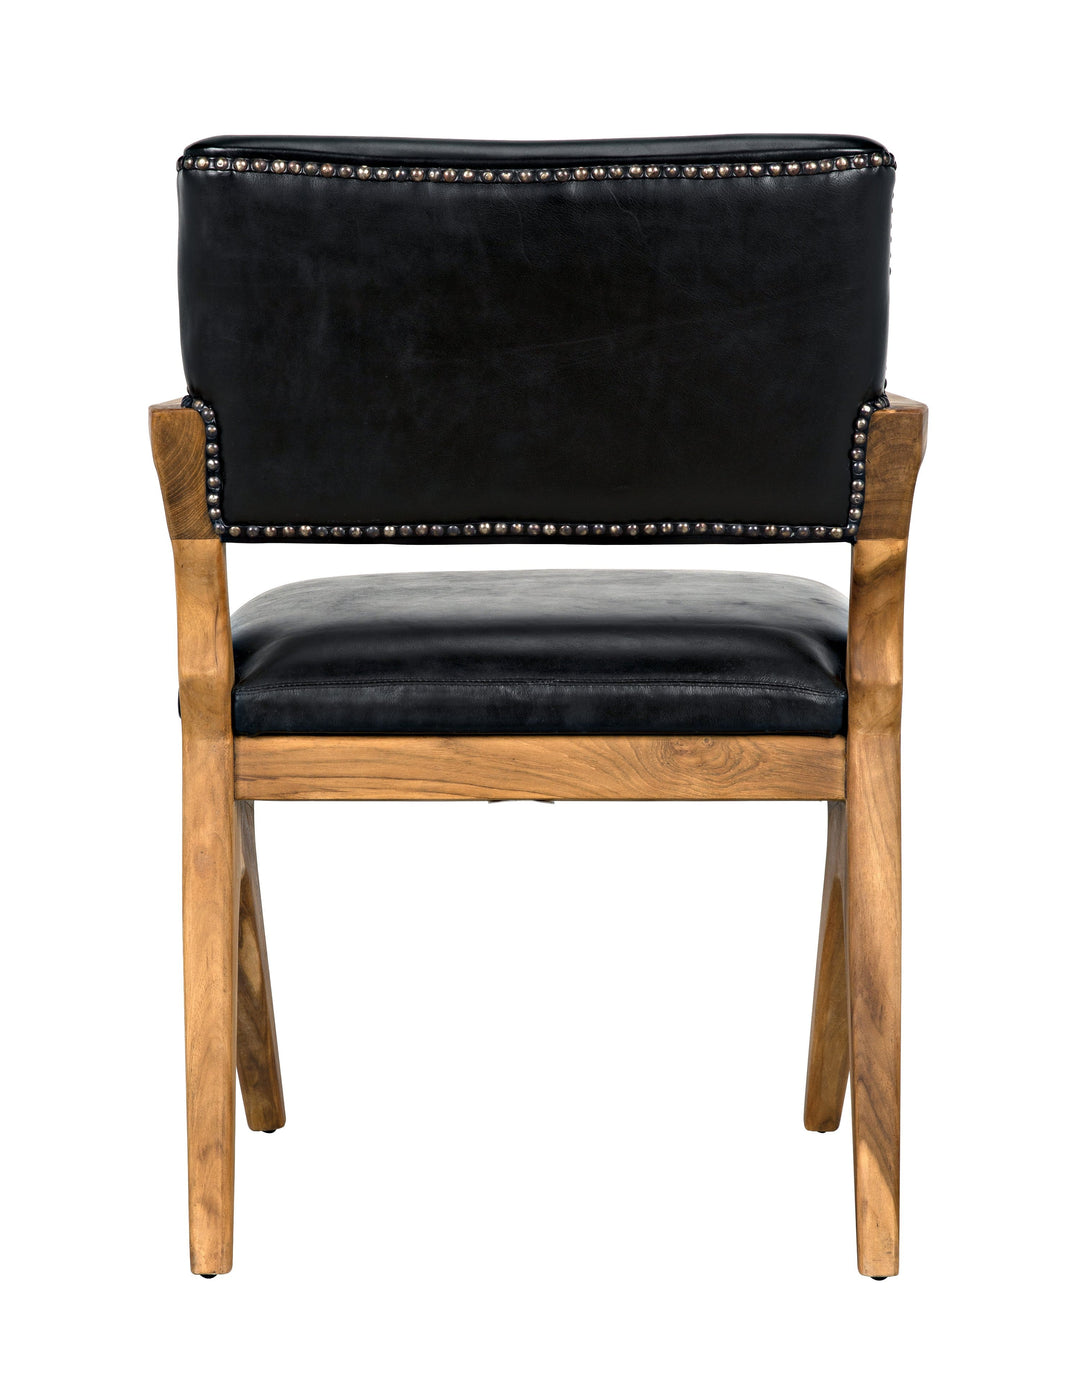 Delanos Chair - Clear Coat Satin